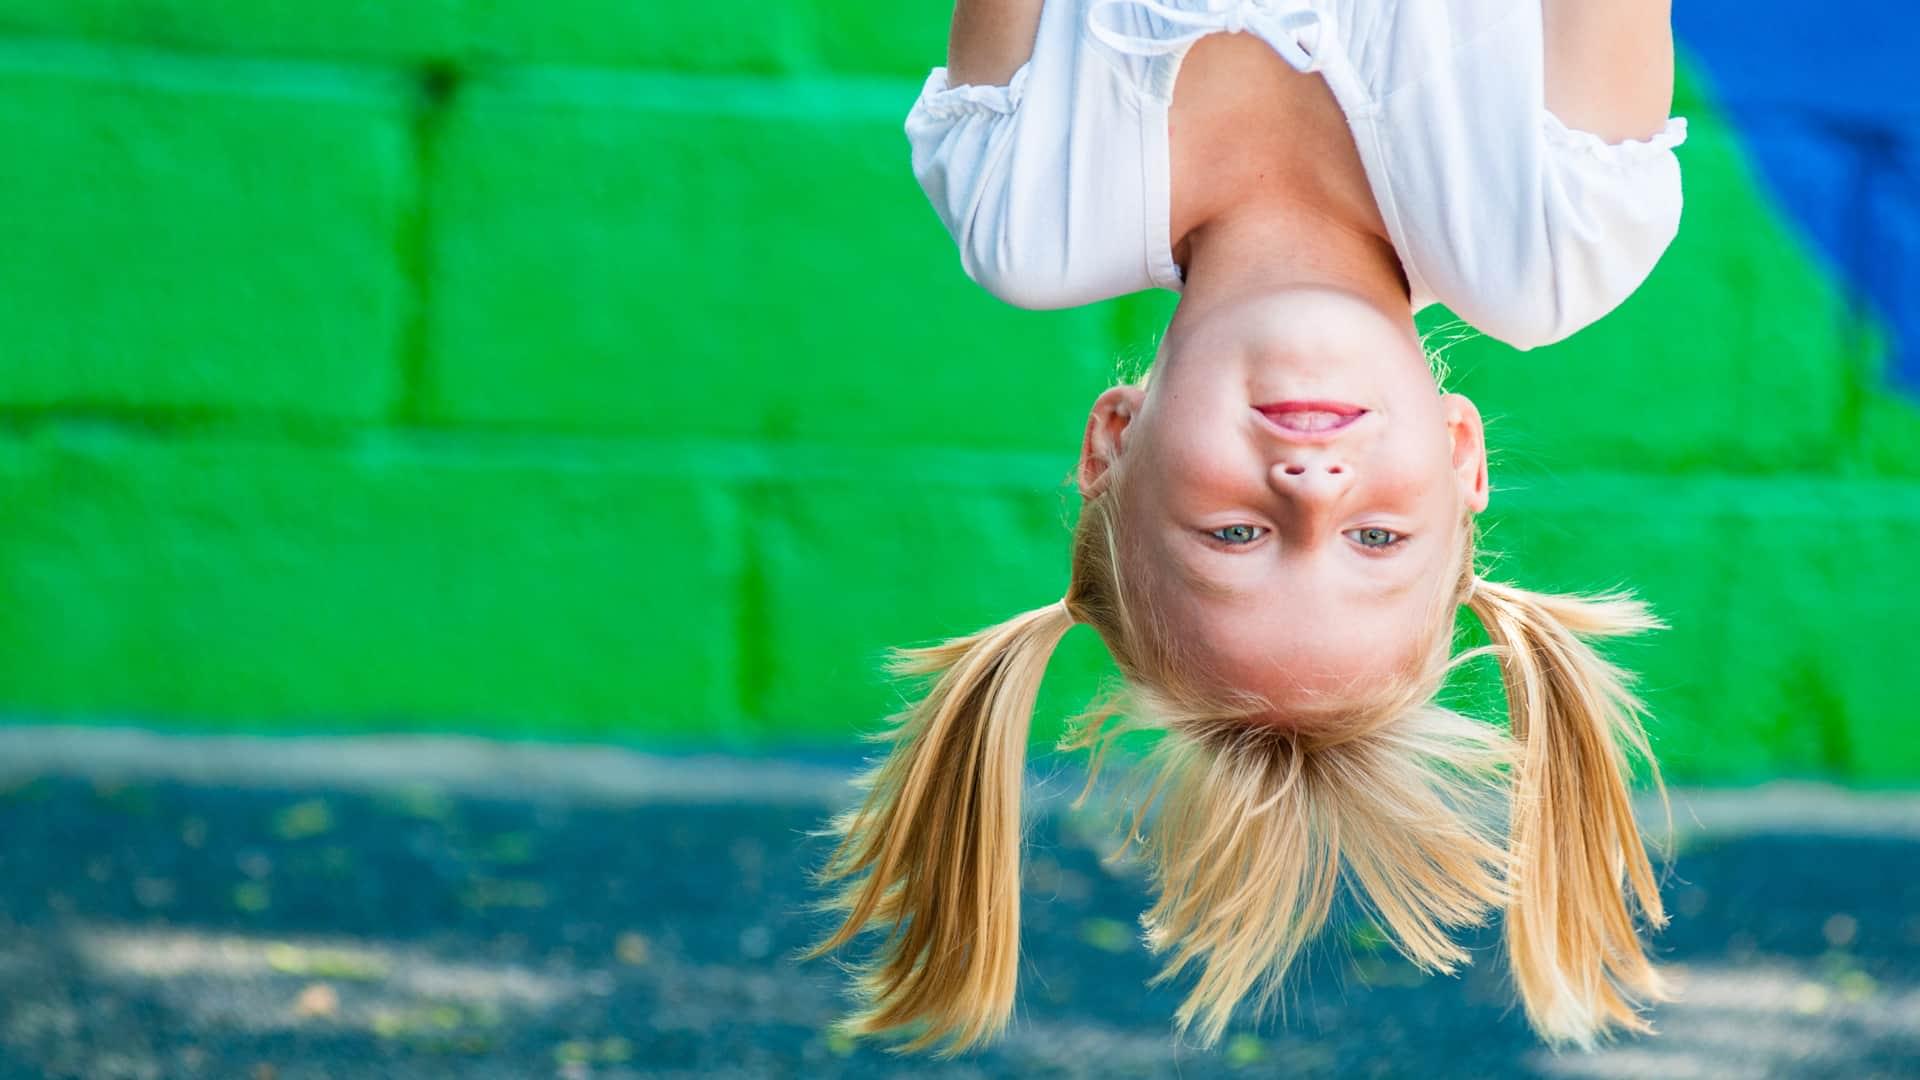 Blonde girl hanging upside down